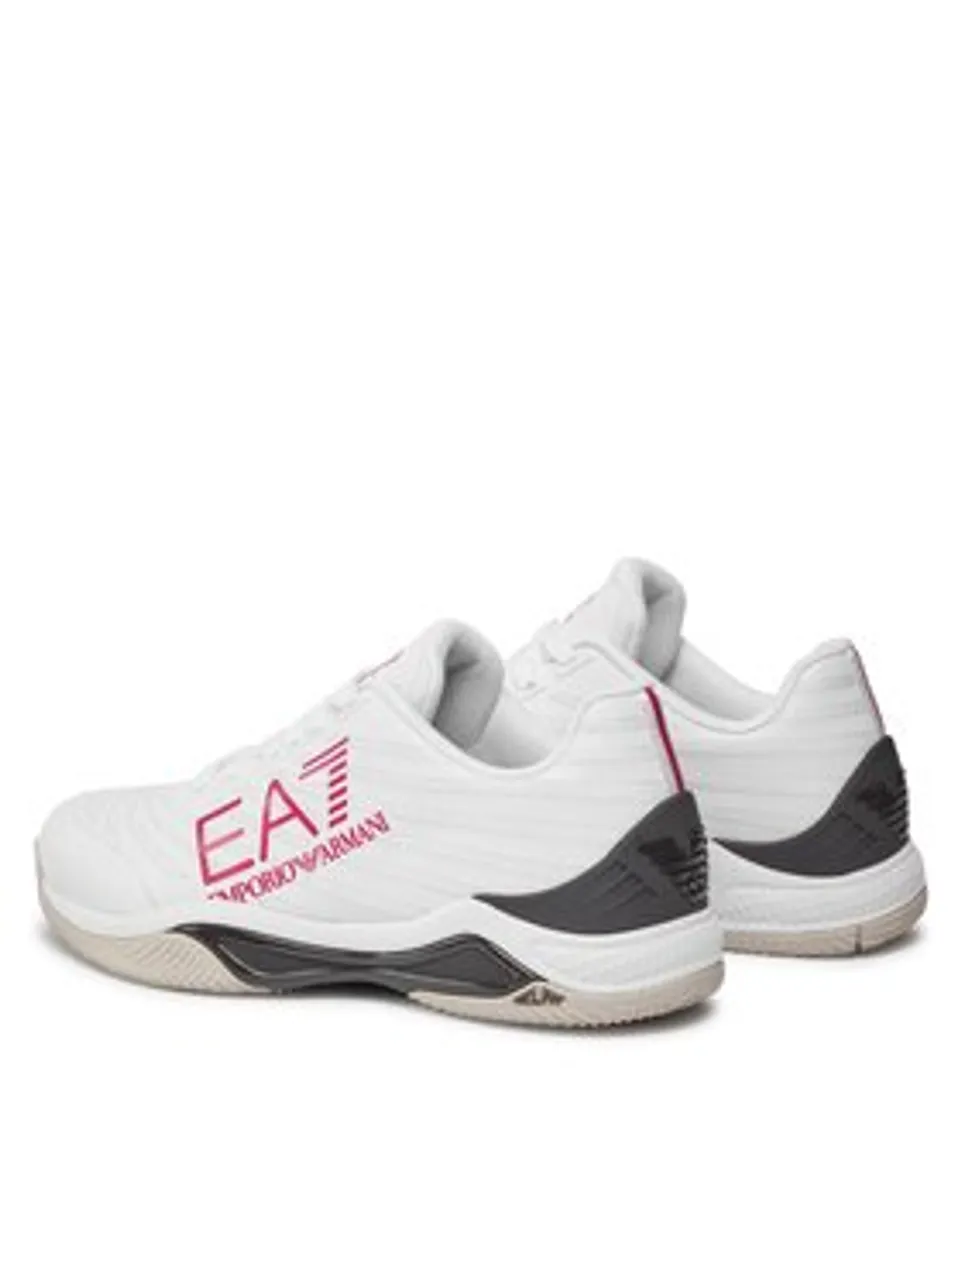 EA7 Emporio Armani Sneakers X8X079 XK203 S878 Weiß